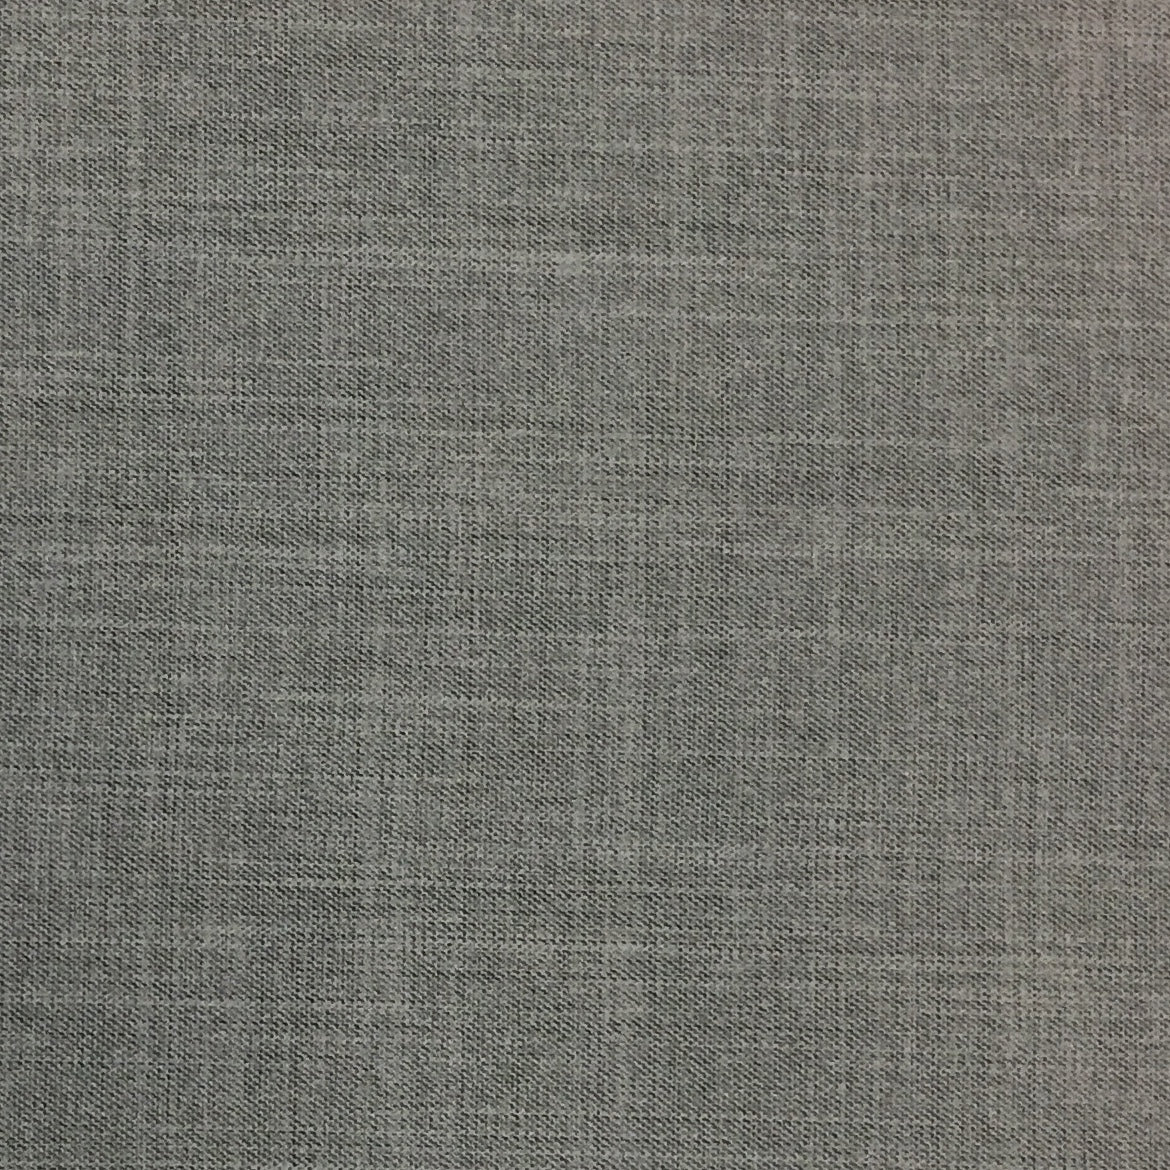 3-Layer Two Tone Twill Fabric - Charcoal (Sold per Yard)